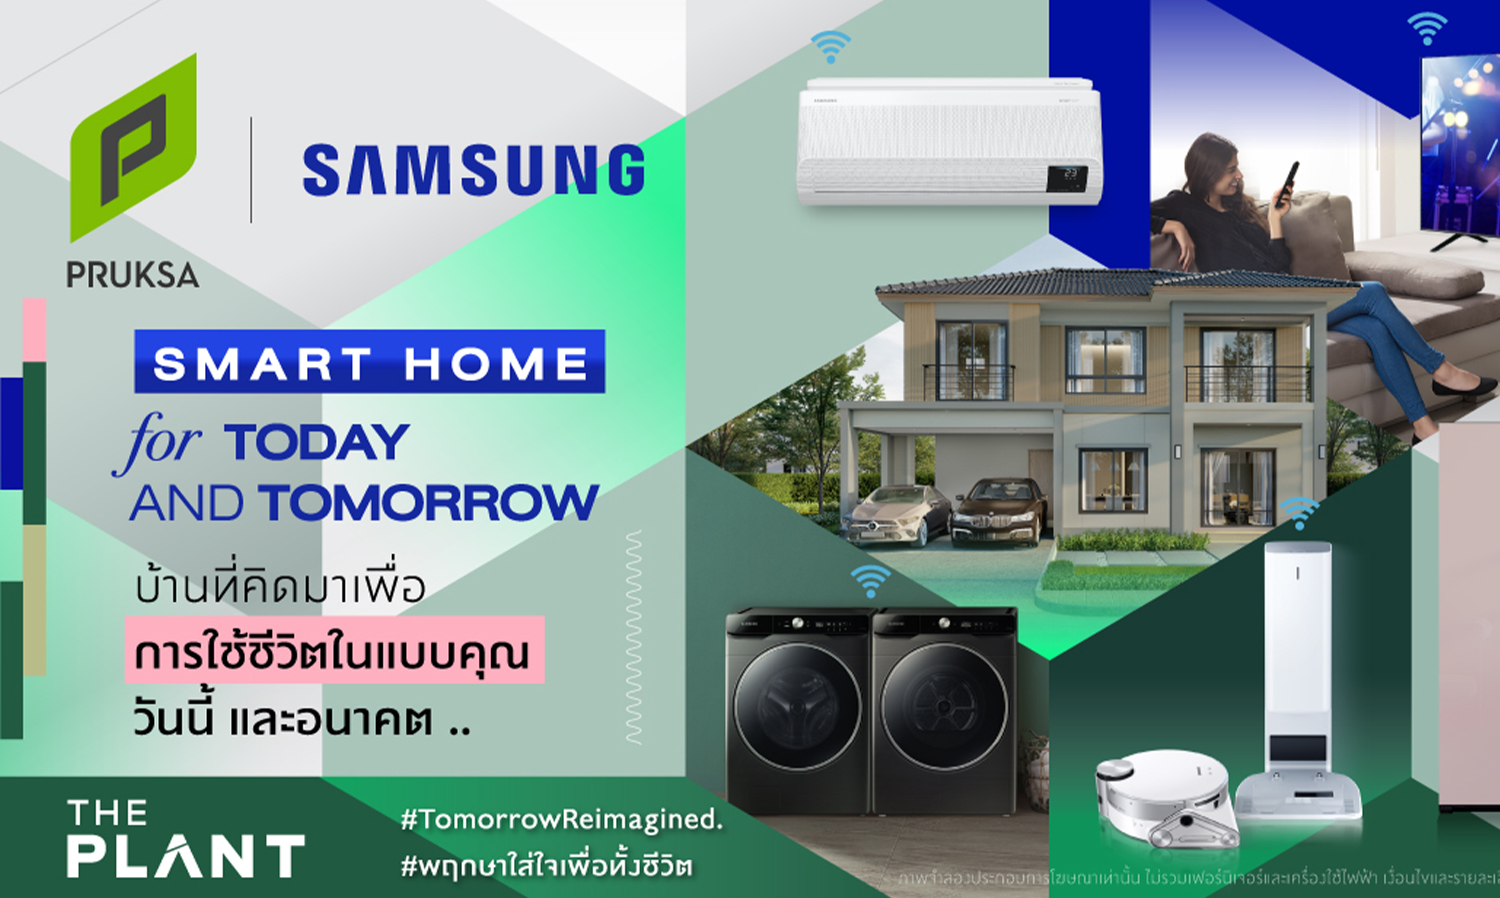 Pruksa จับมือ Samsung มอบนวัตกรรมบ้านที่ออกแบบเพื่อคุณในวันนี้และอนาคต ด้วย 4 คอนเซ็ปต์ Smart Living – Smart Design – Smart Health – Smart Saving